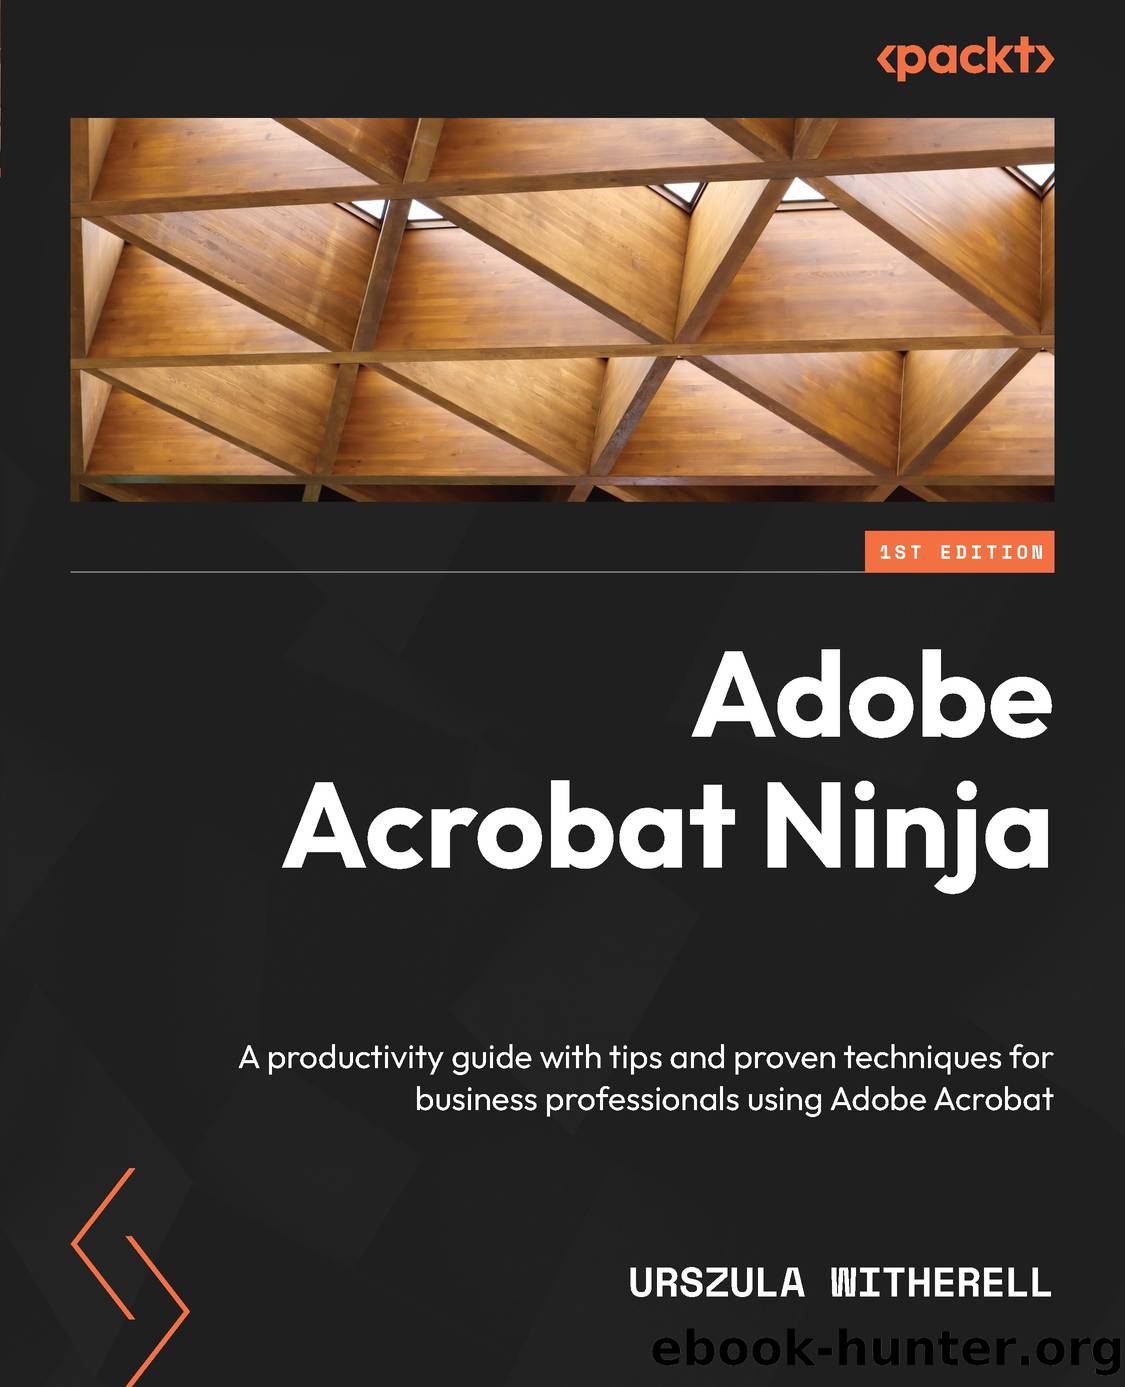 Adobe Acrobat Ninja by Urszula Witherell